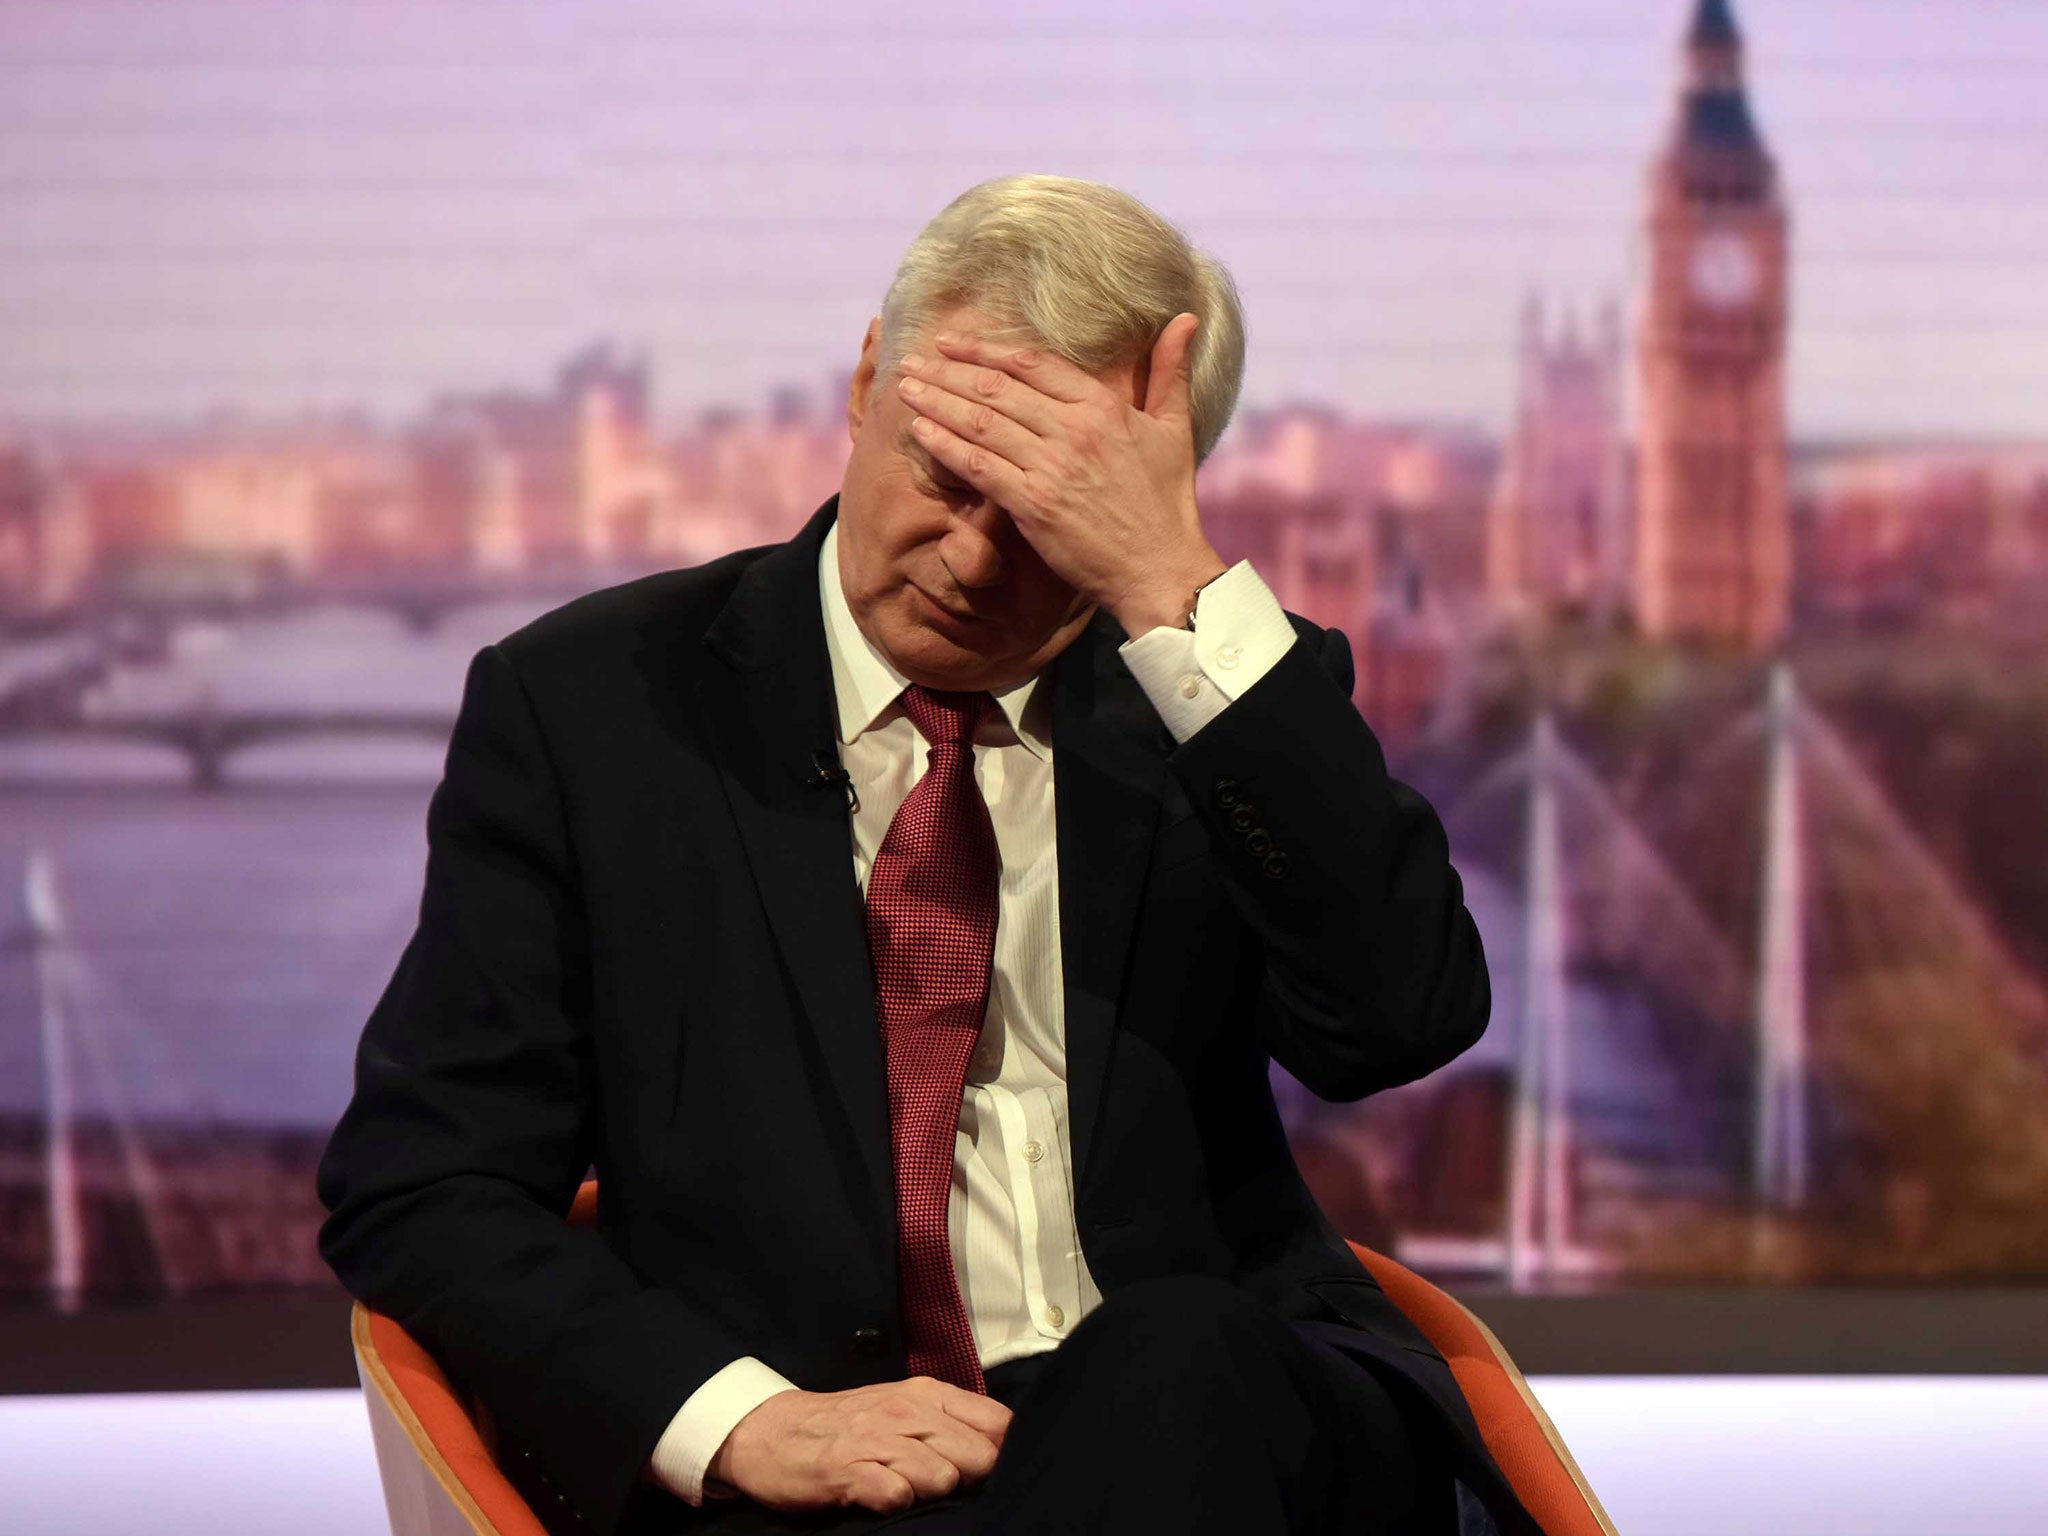 Brexit Secretary David Davis appears on the BBC's Andrew Marr Show